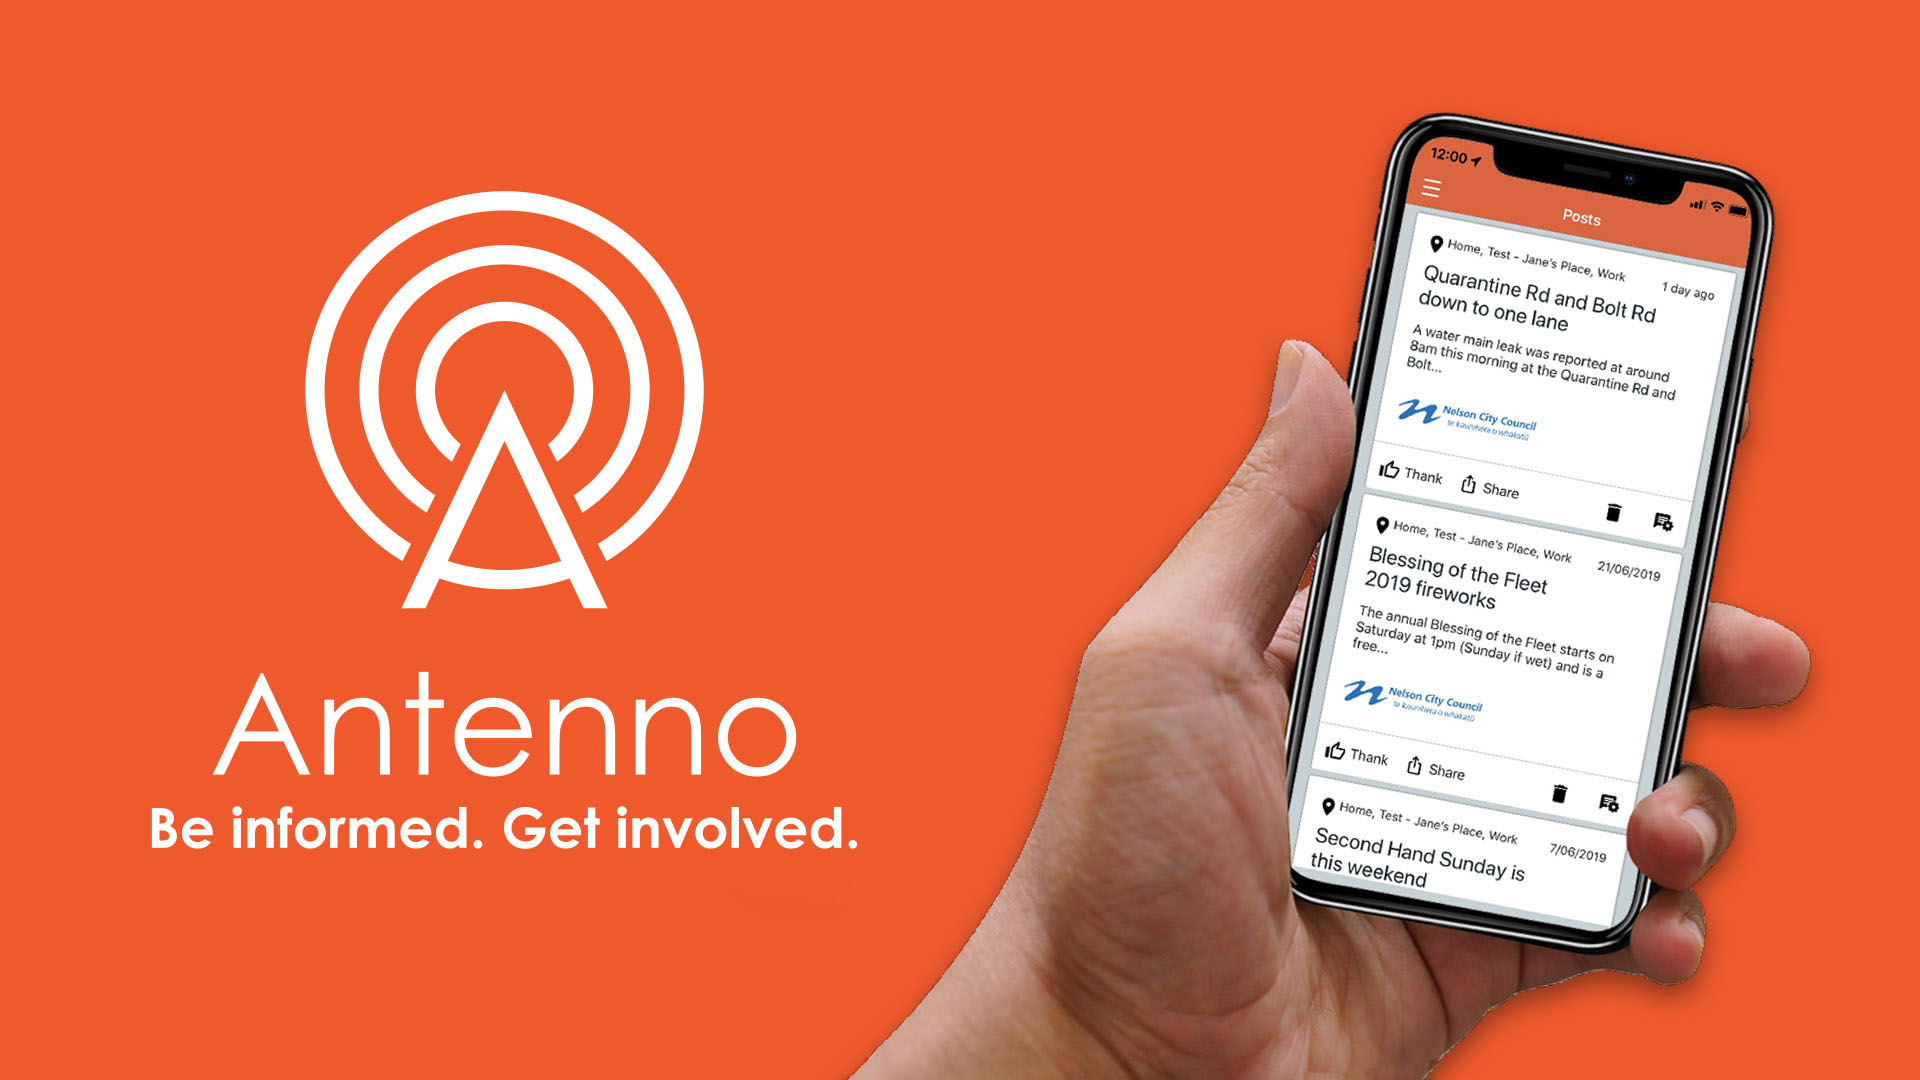 Antenno mobile app promo image